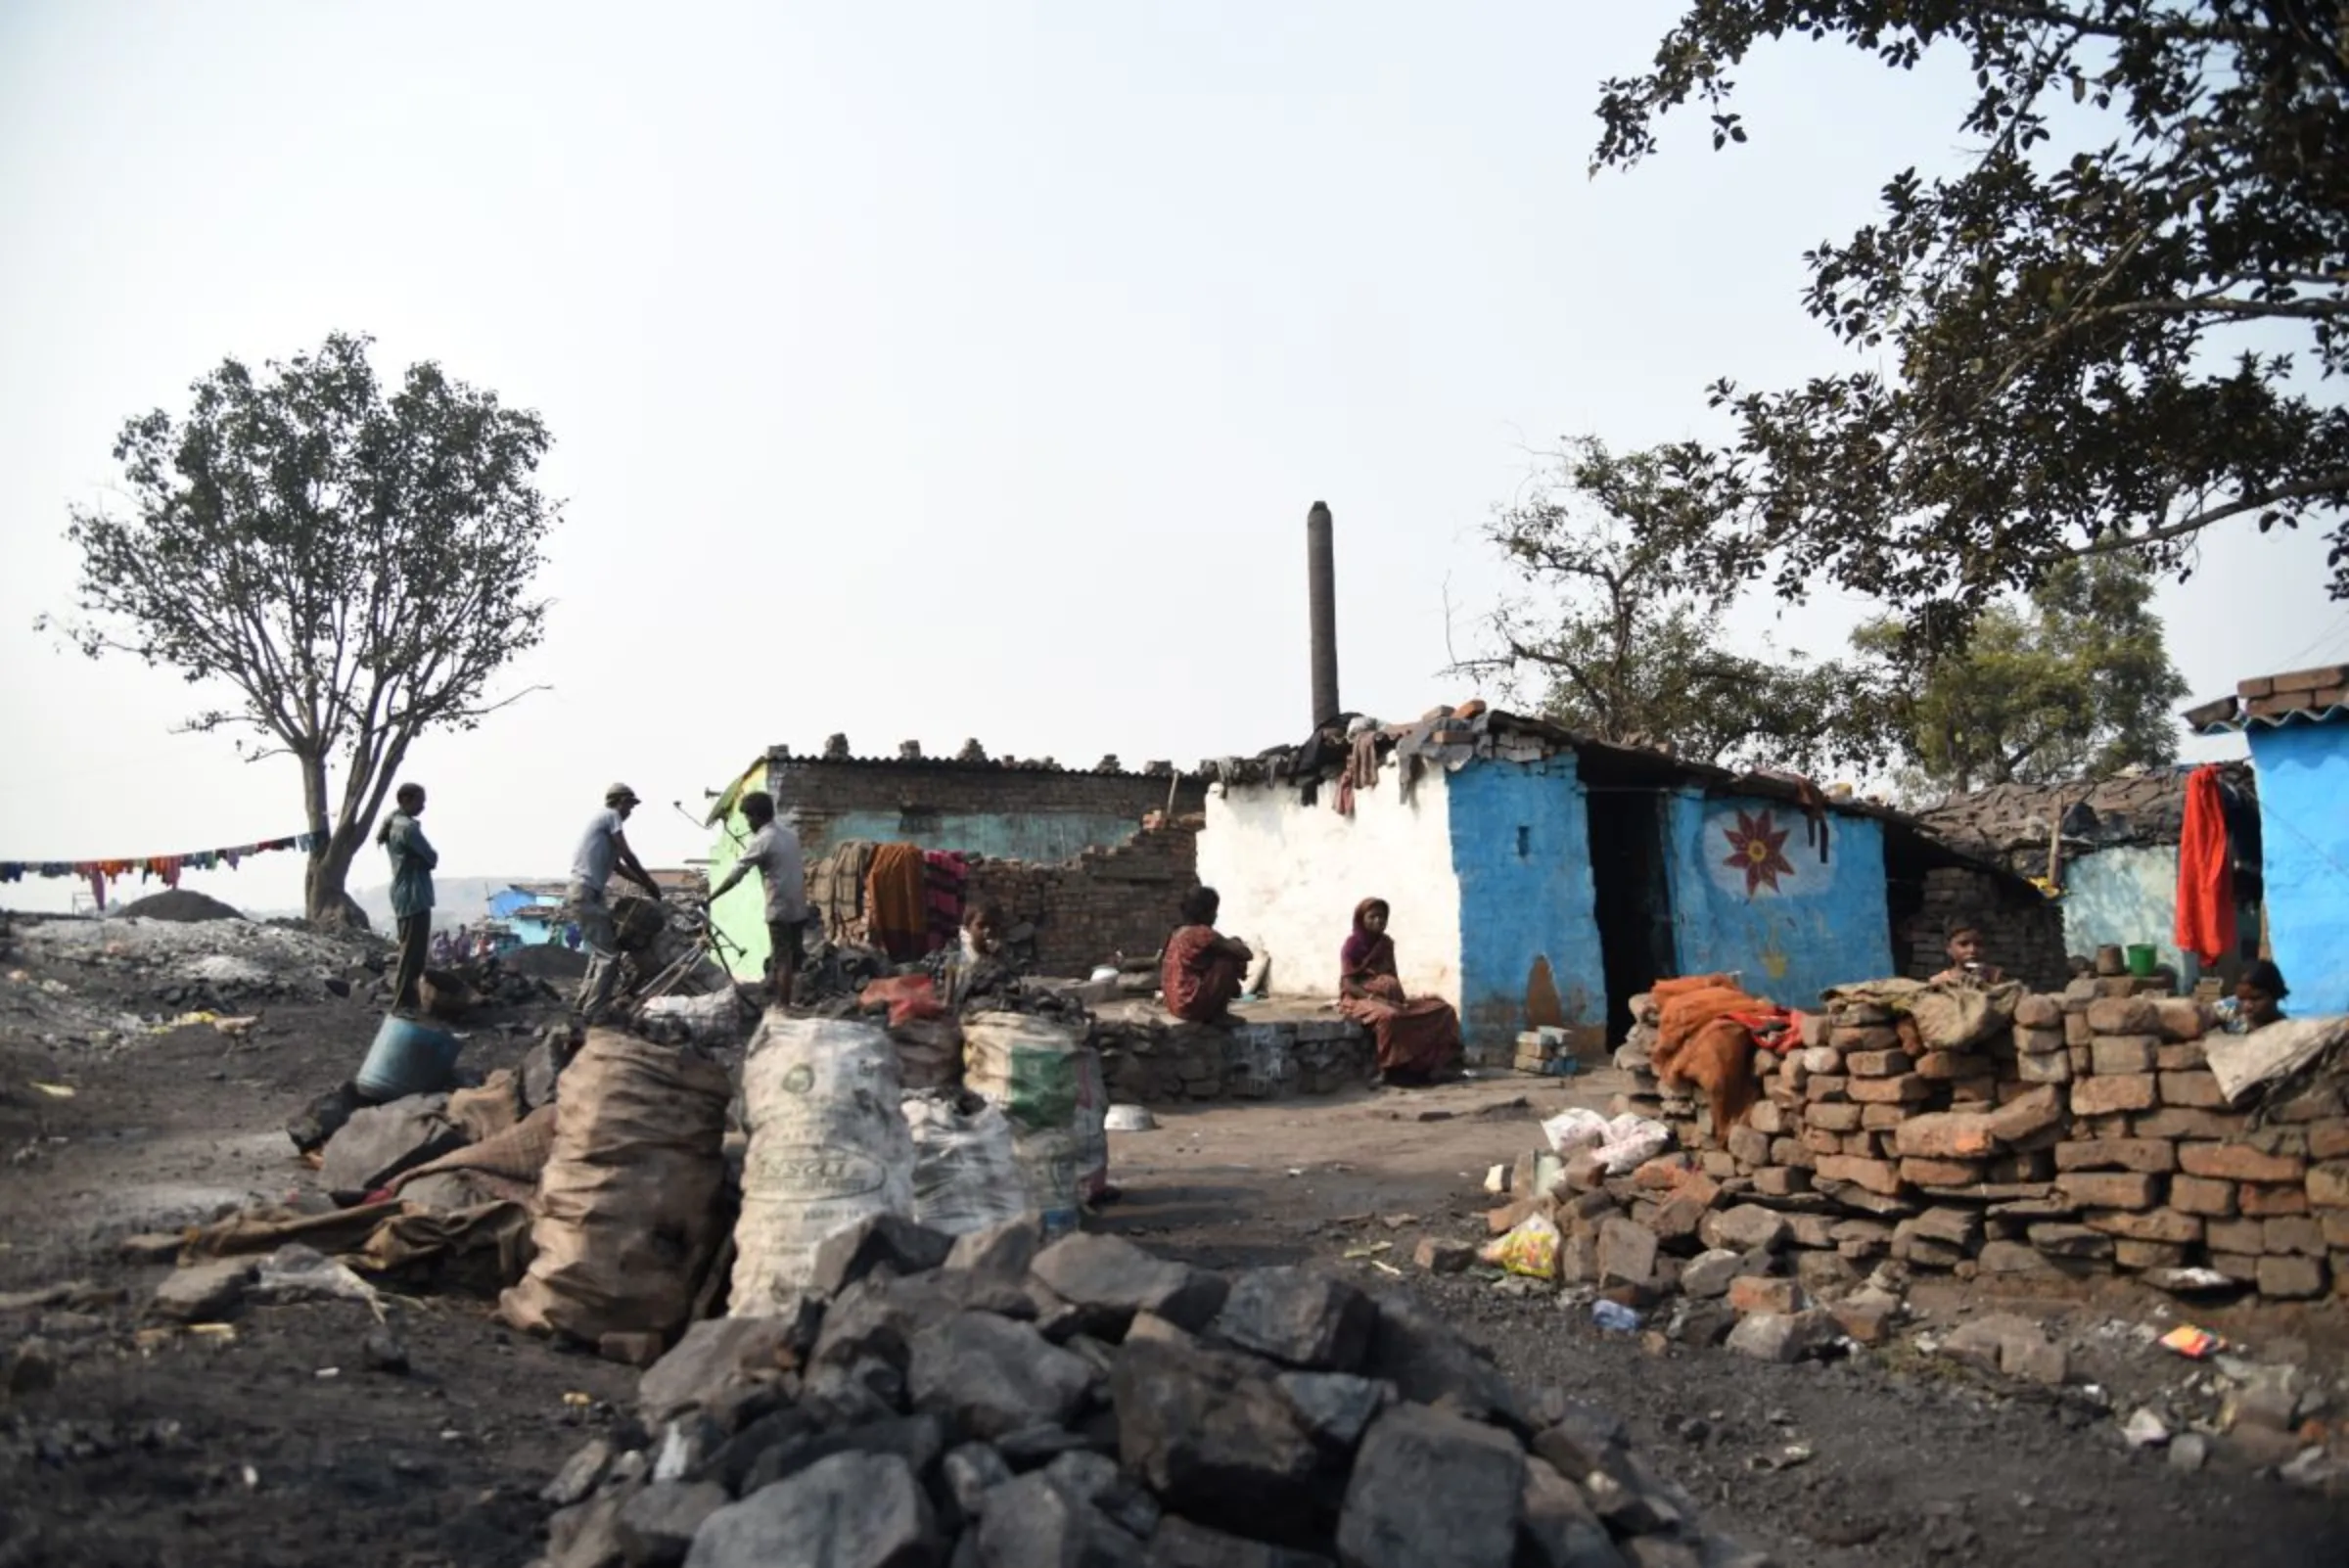 A habitation near a mining area in Jharia coalfield, India, November 10, 2022. Thomson Reuters Foundation/Tanmoy Bhaduri